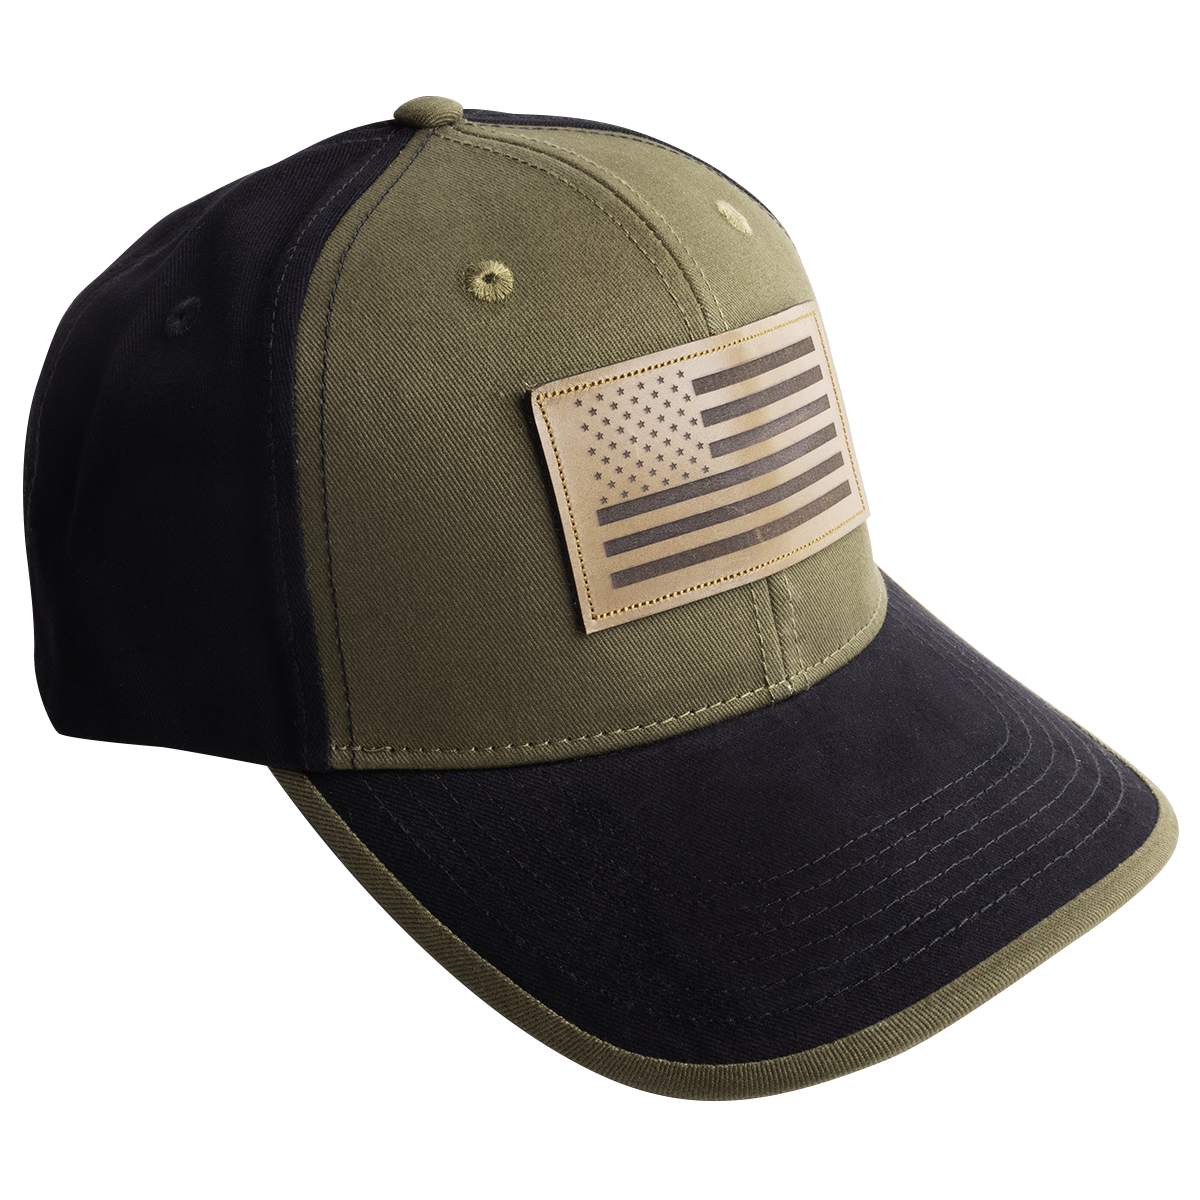 BlackCanyon Outfitters BCOCAPLTRFLG Leather-like American Flag Cap Trucker Hat Snapback Winter Baseball Cap